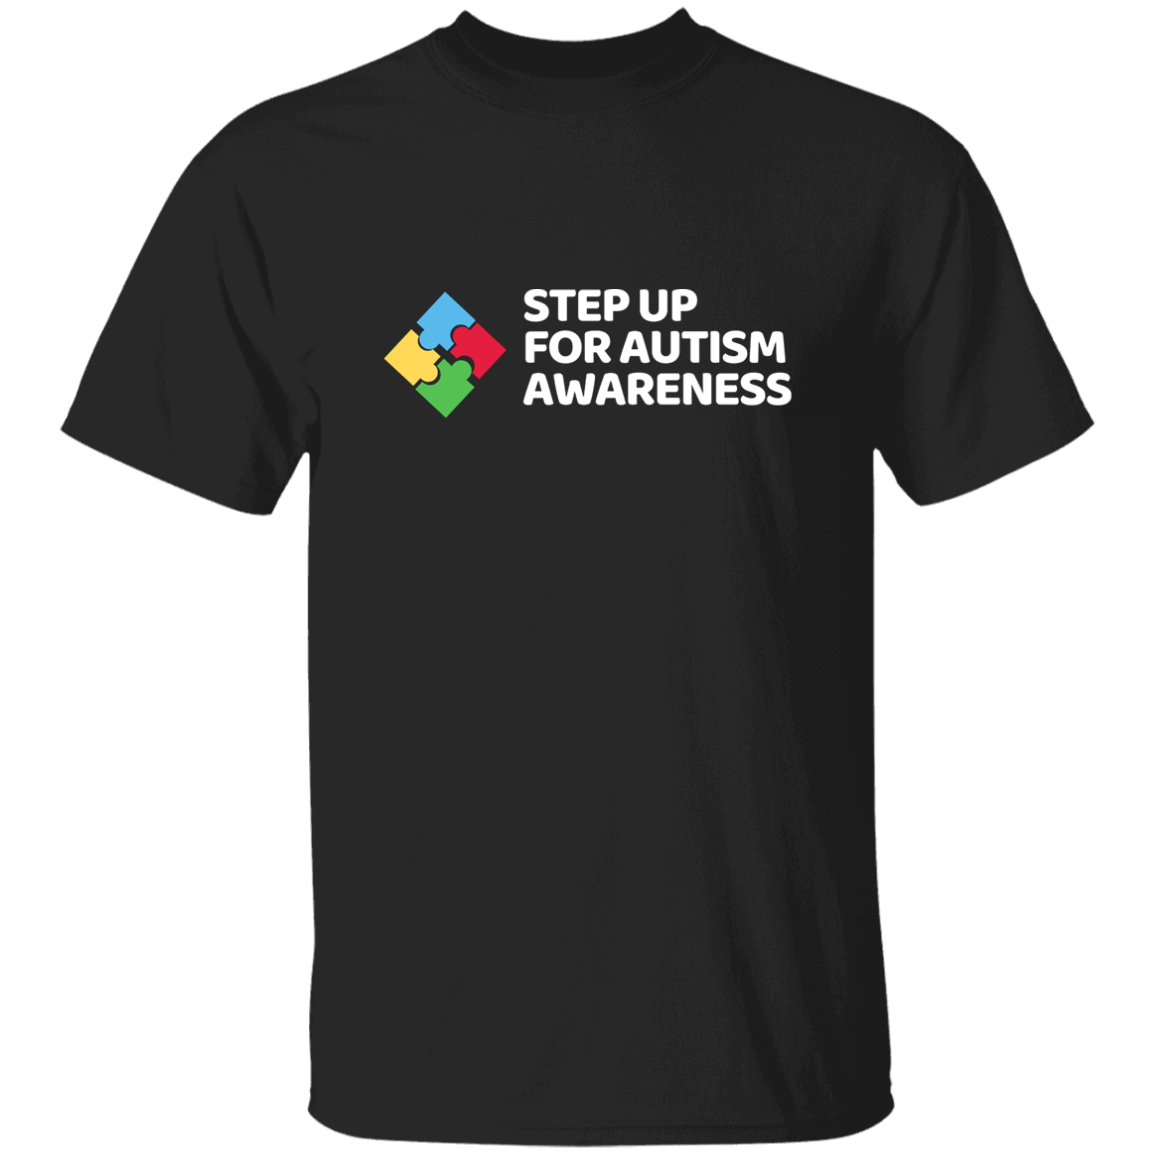 Autism Awareness (White Print) G500 5.3 oz. T-Shirt